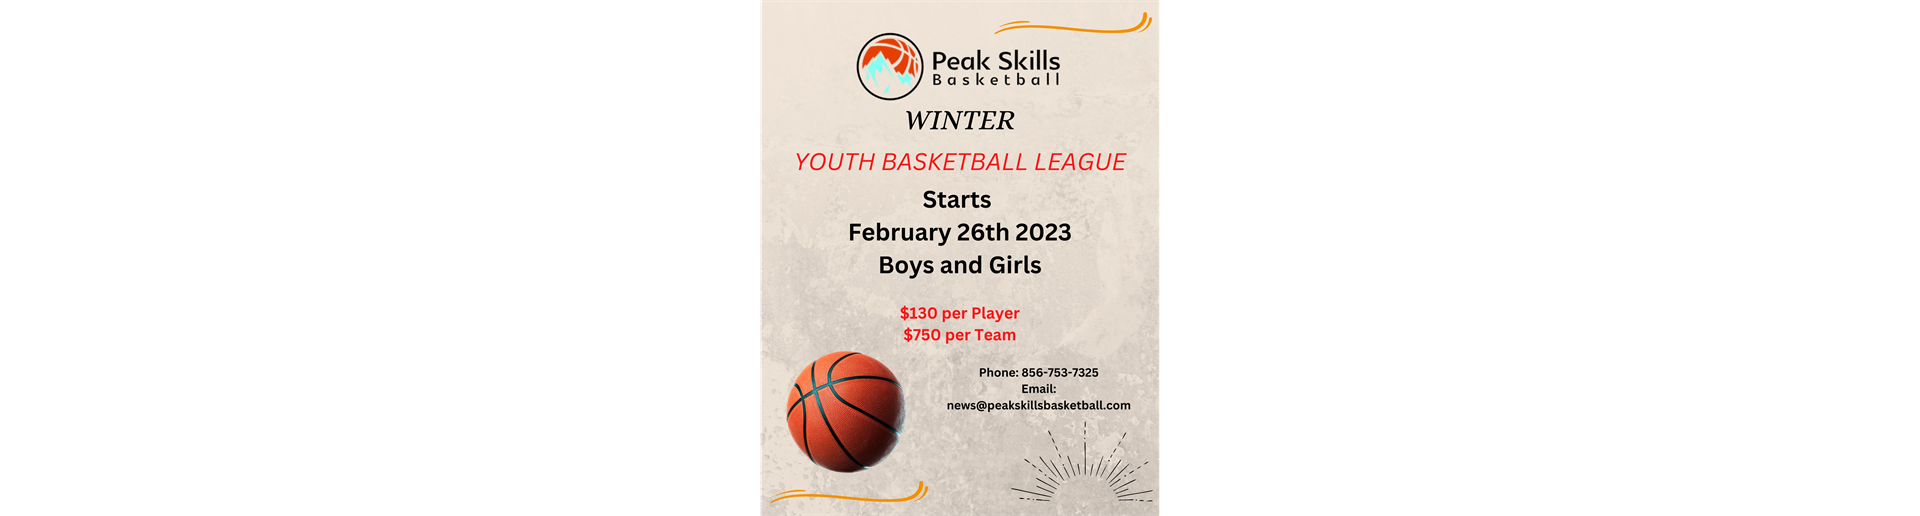 Peak Winter Youth Basketball League #2